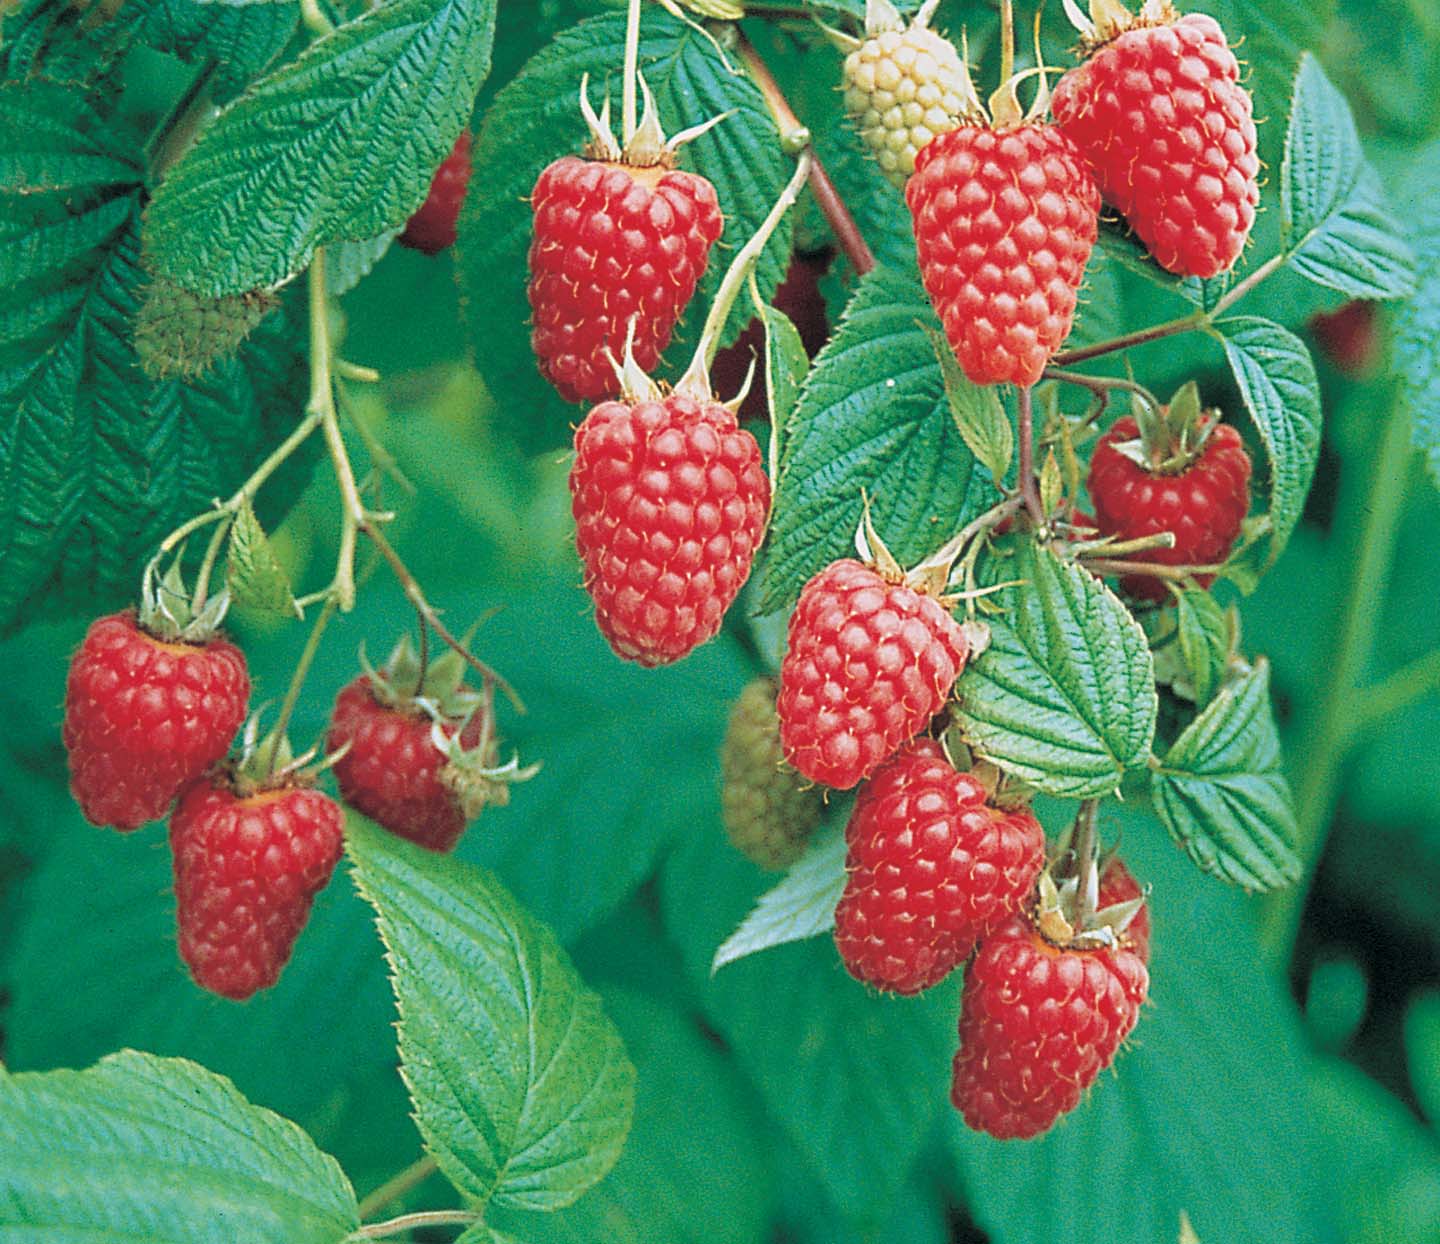 Mid Season Cropping Raspberry Plants